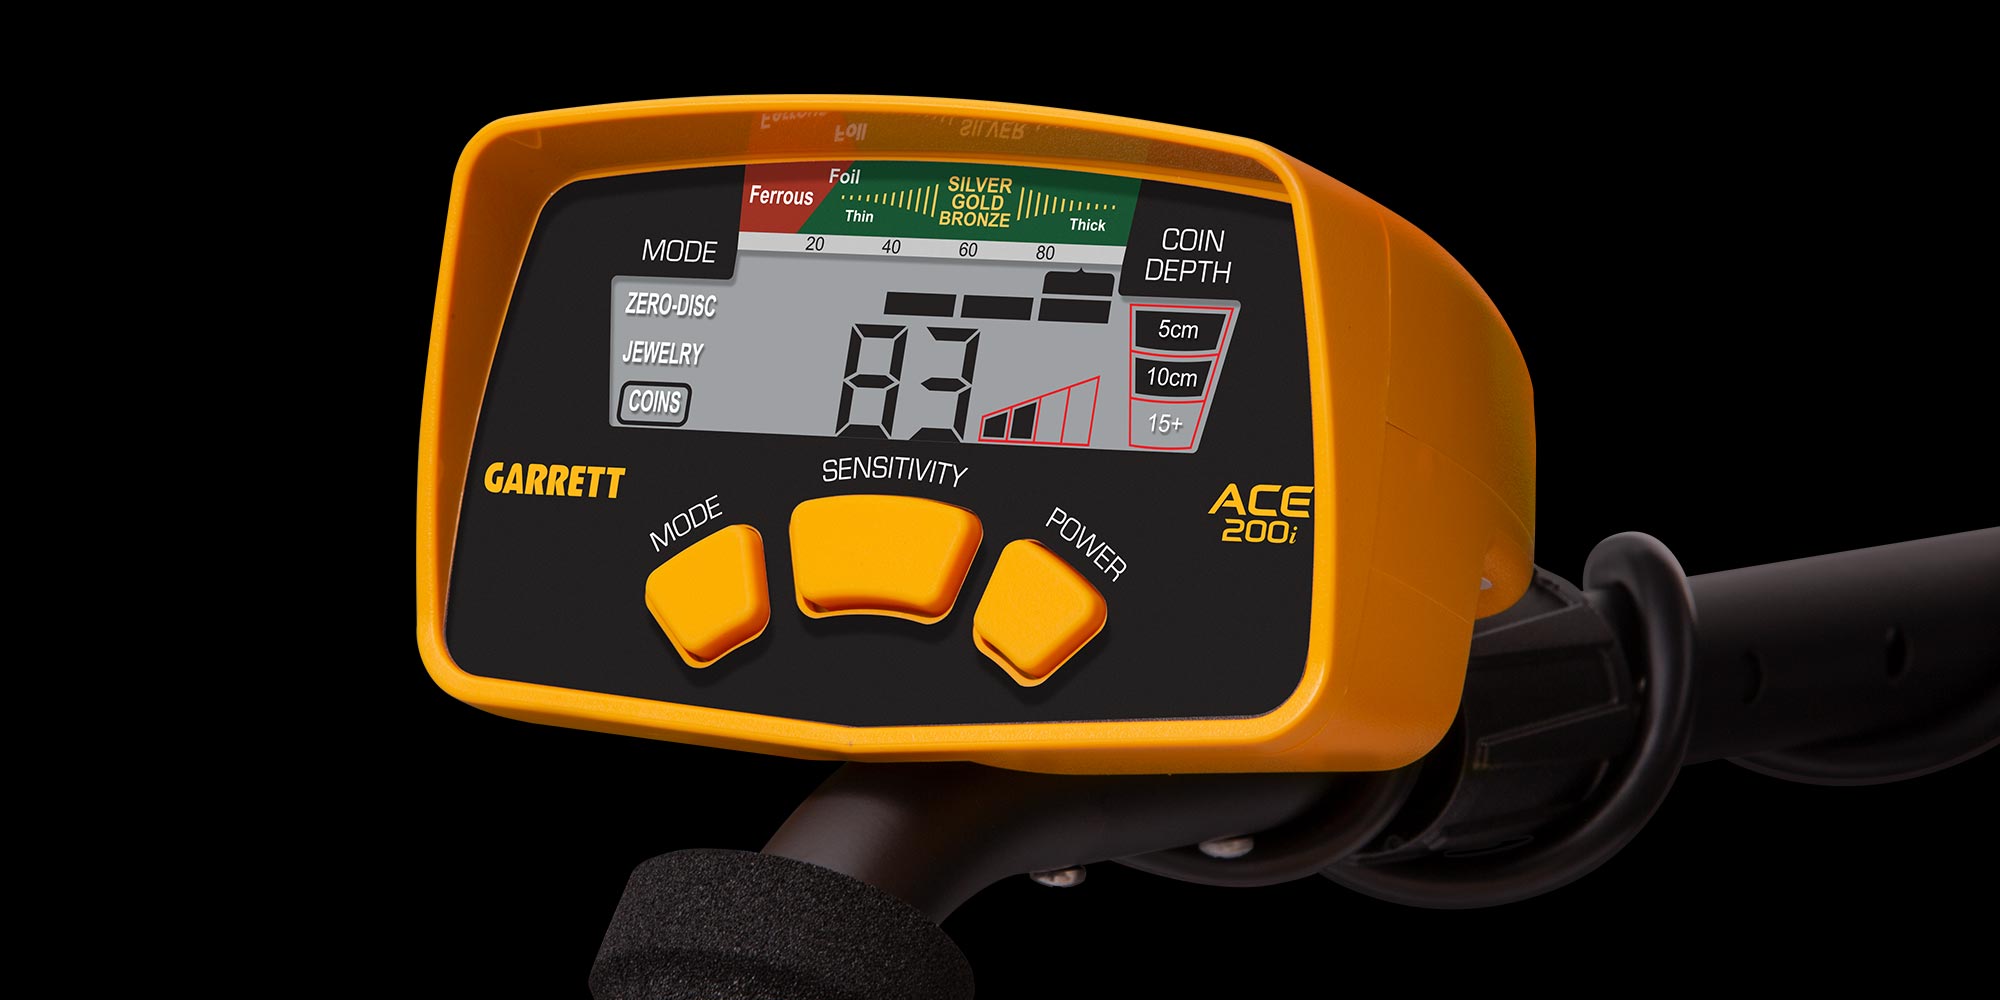 Detector de metales GARRETT Ace 200i - Eurodetection